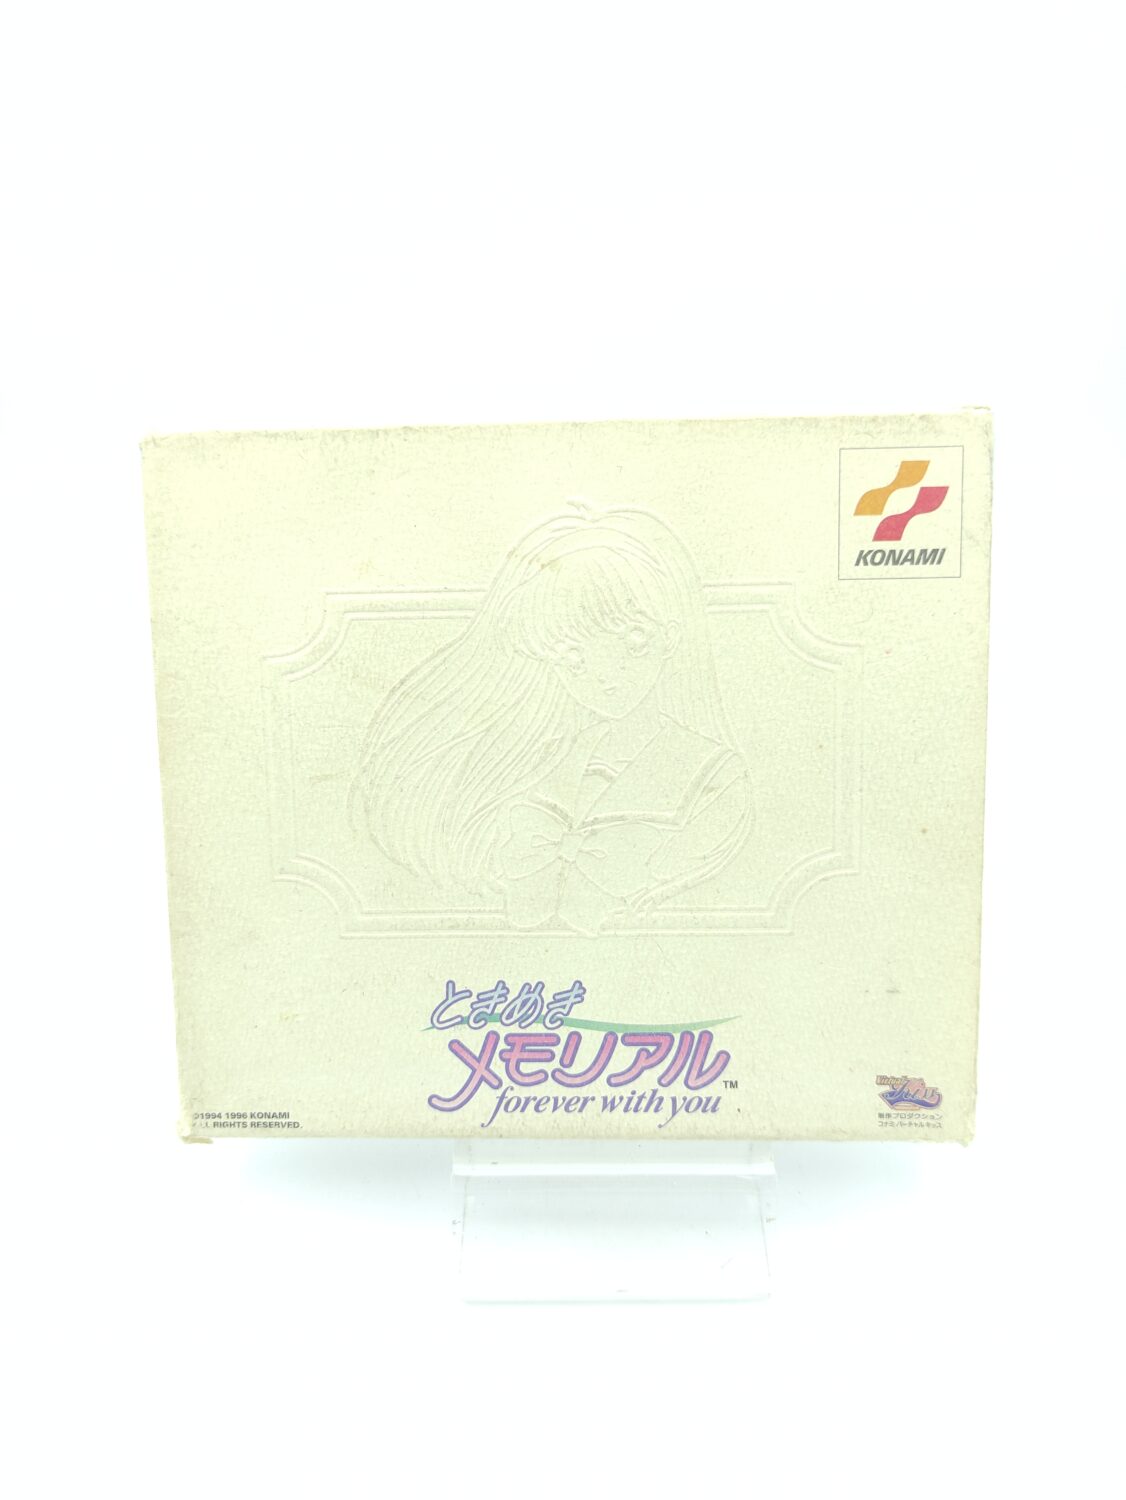 Tokimeki Memorial Forever with You Special Sega Saturn SS Japan Import T-9504G 2